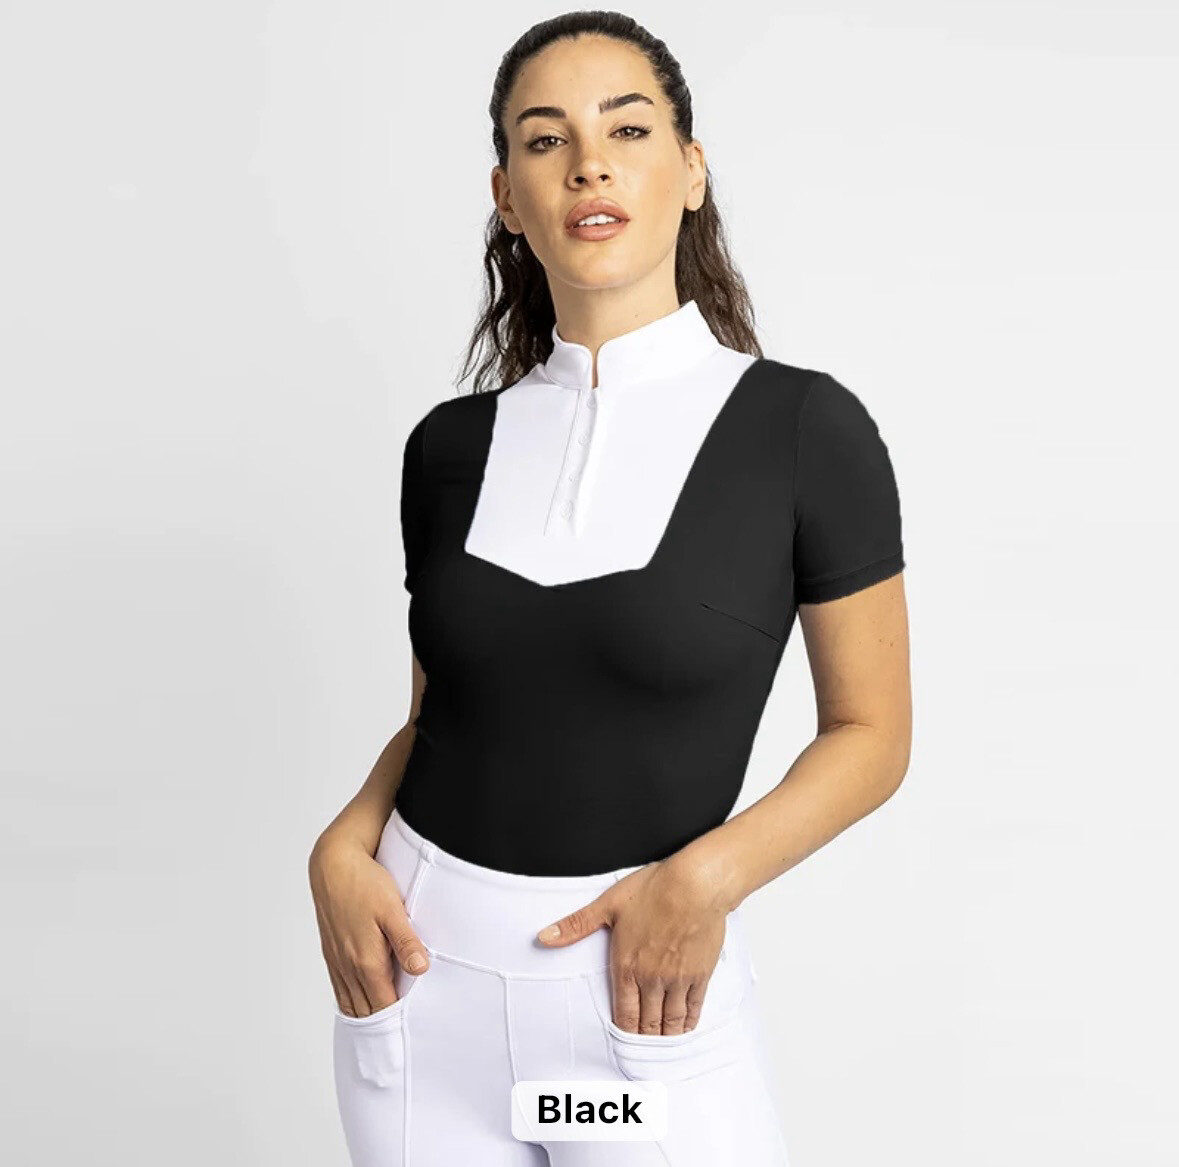 Equi-Site Competition Shirt BLACK, Competition Shirt Black: XS